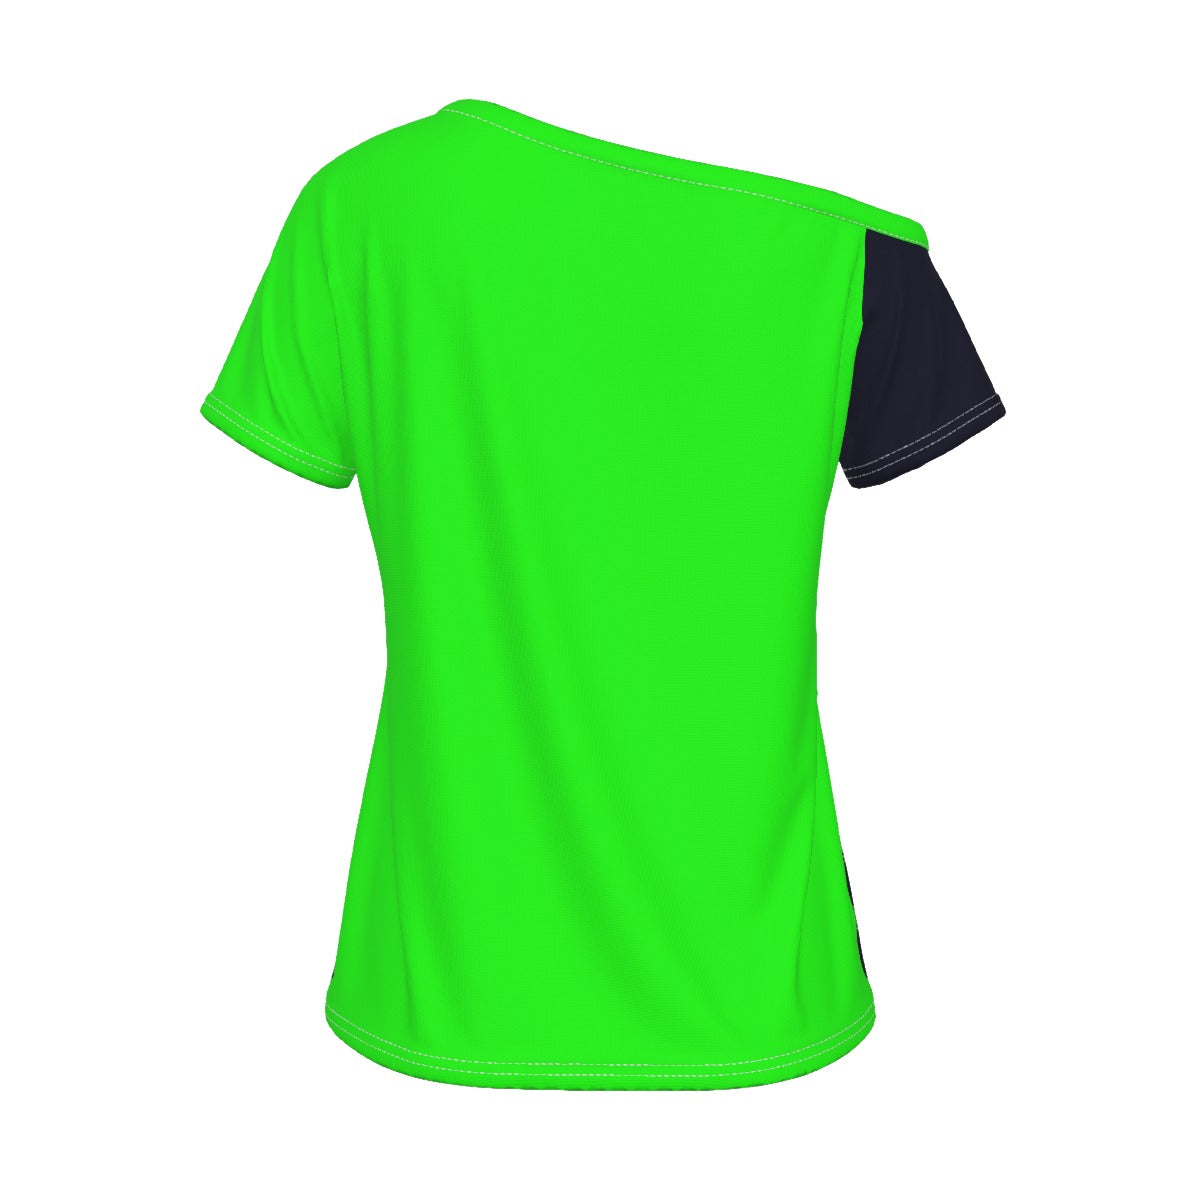 Lisa - Navy Blue - Ball - Women's Pickleball Off-The-Shoulder Sport T-Shirt by Dizzy Pickle